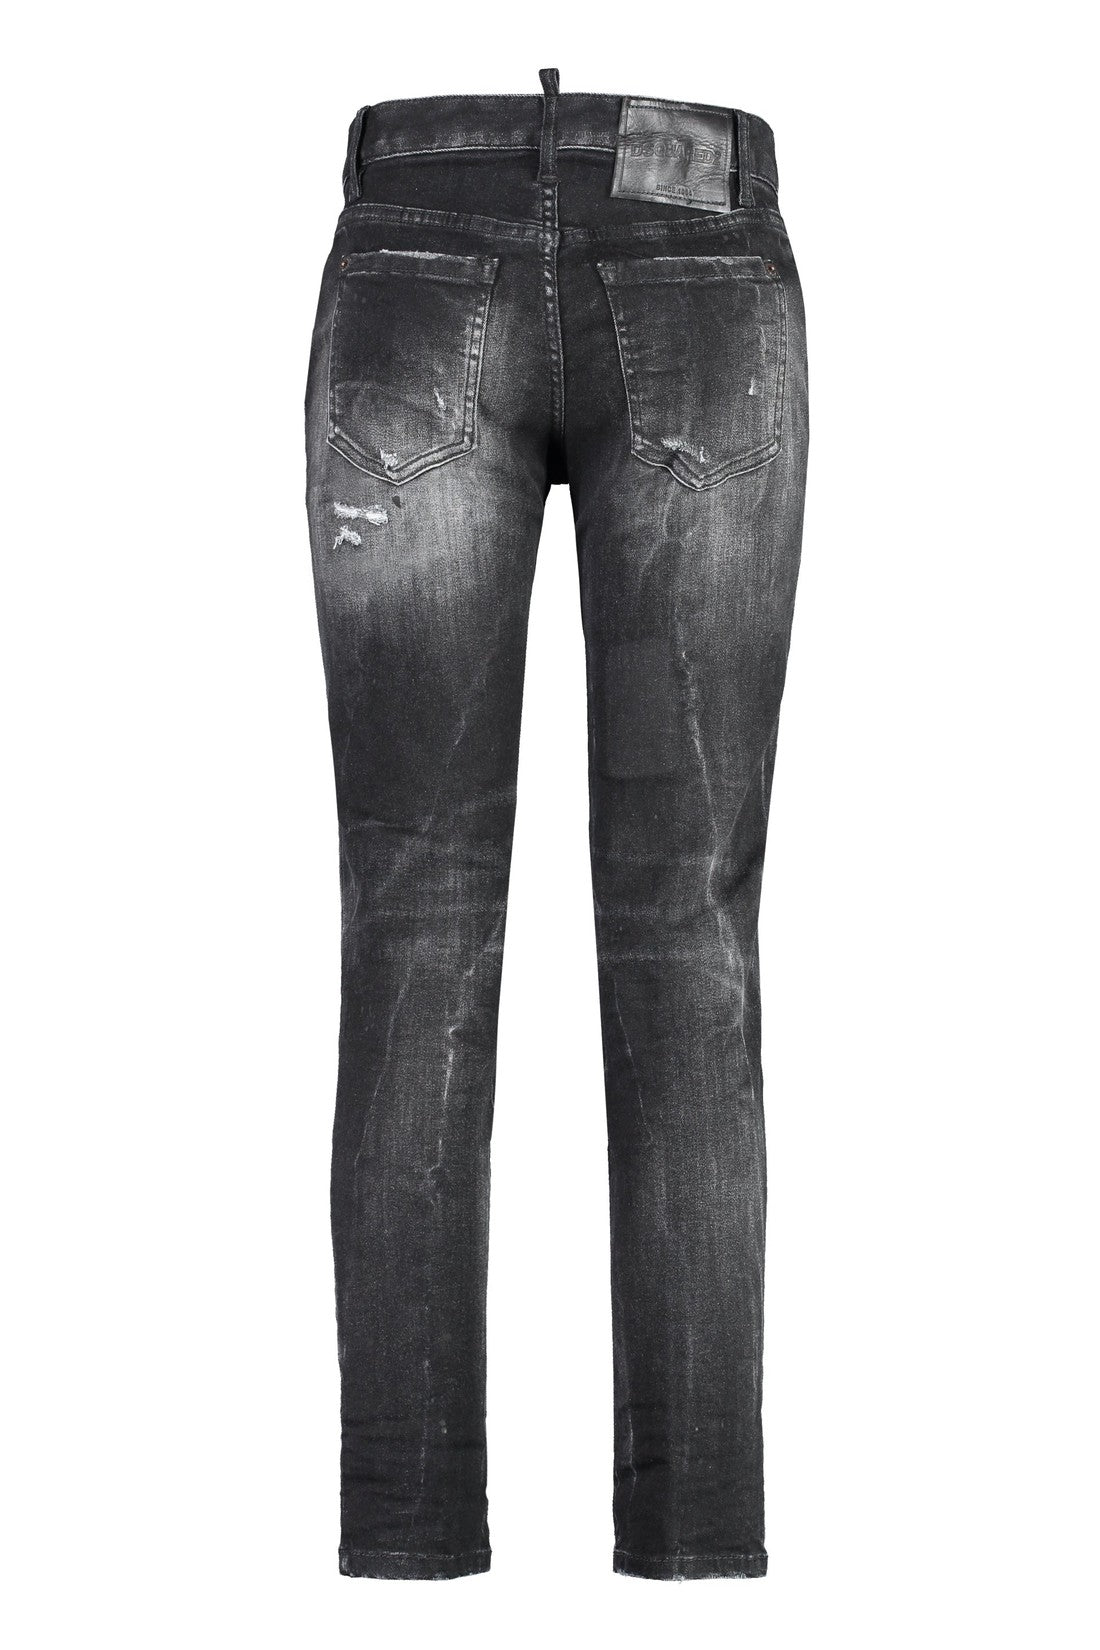 Dsquared2-OUTLET-SALE-Twiggy stretch cotton cropped jeans-ARCHIVIST